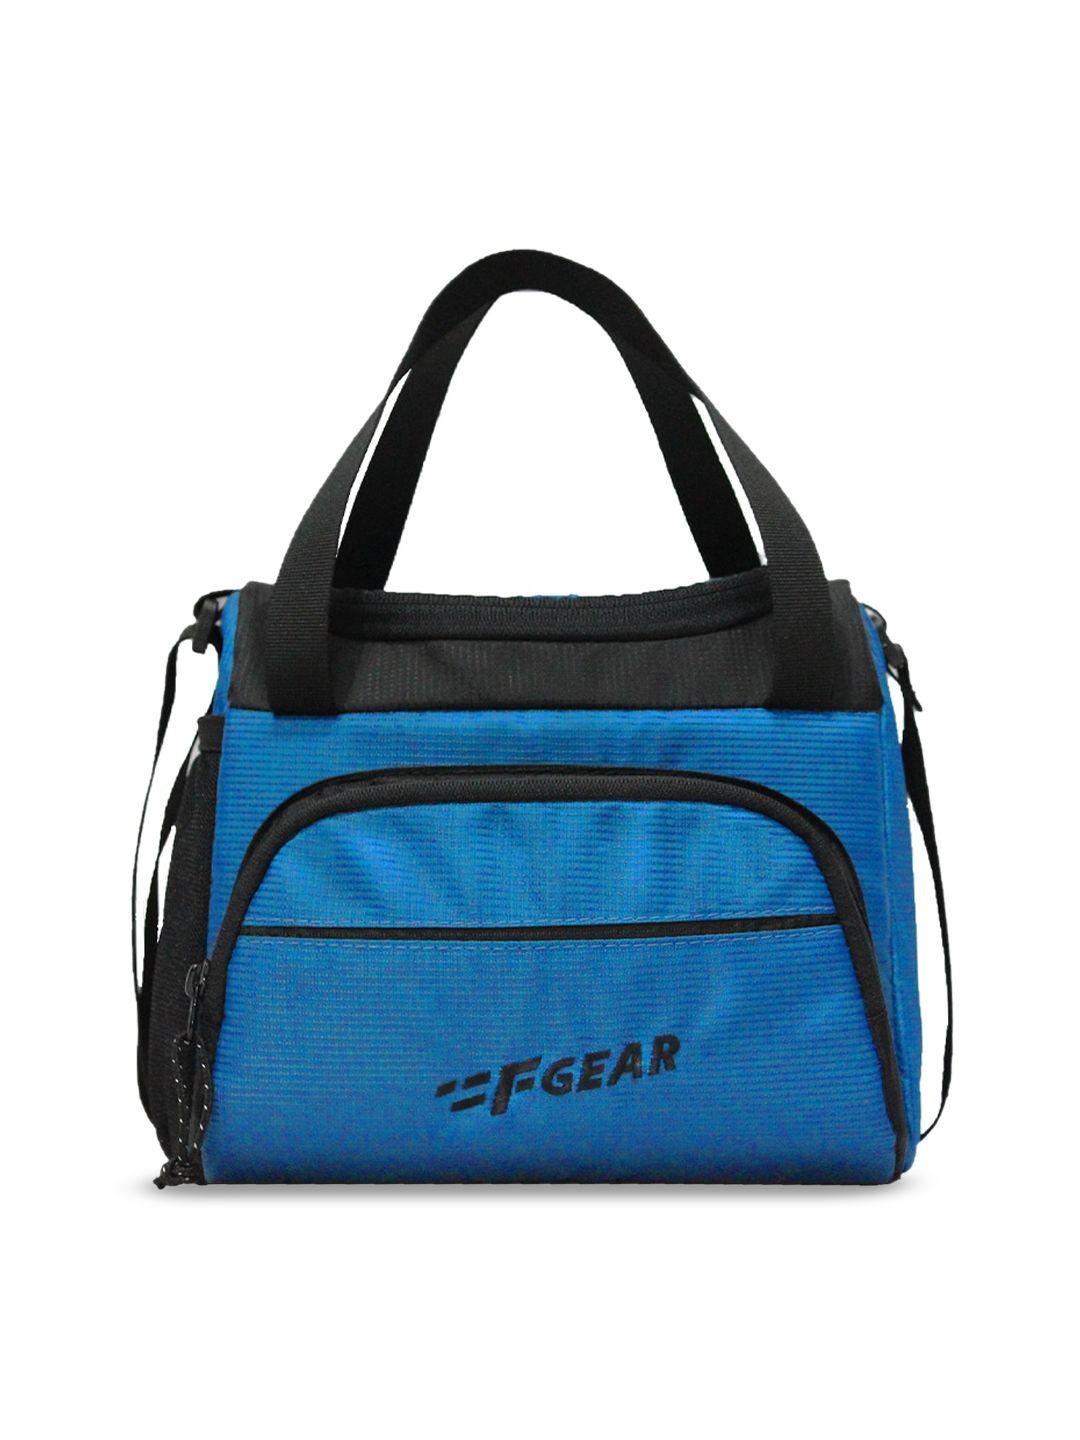 f gear navy blue solid handheld bag